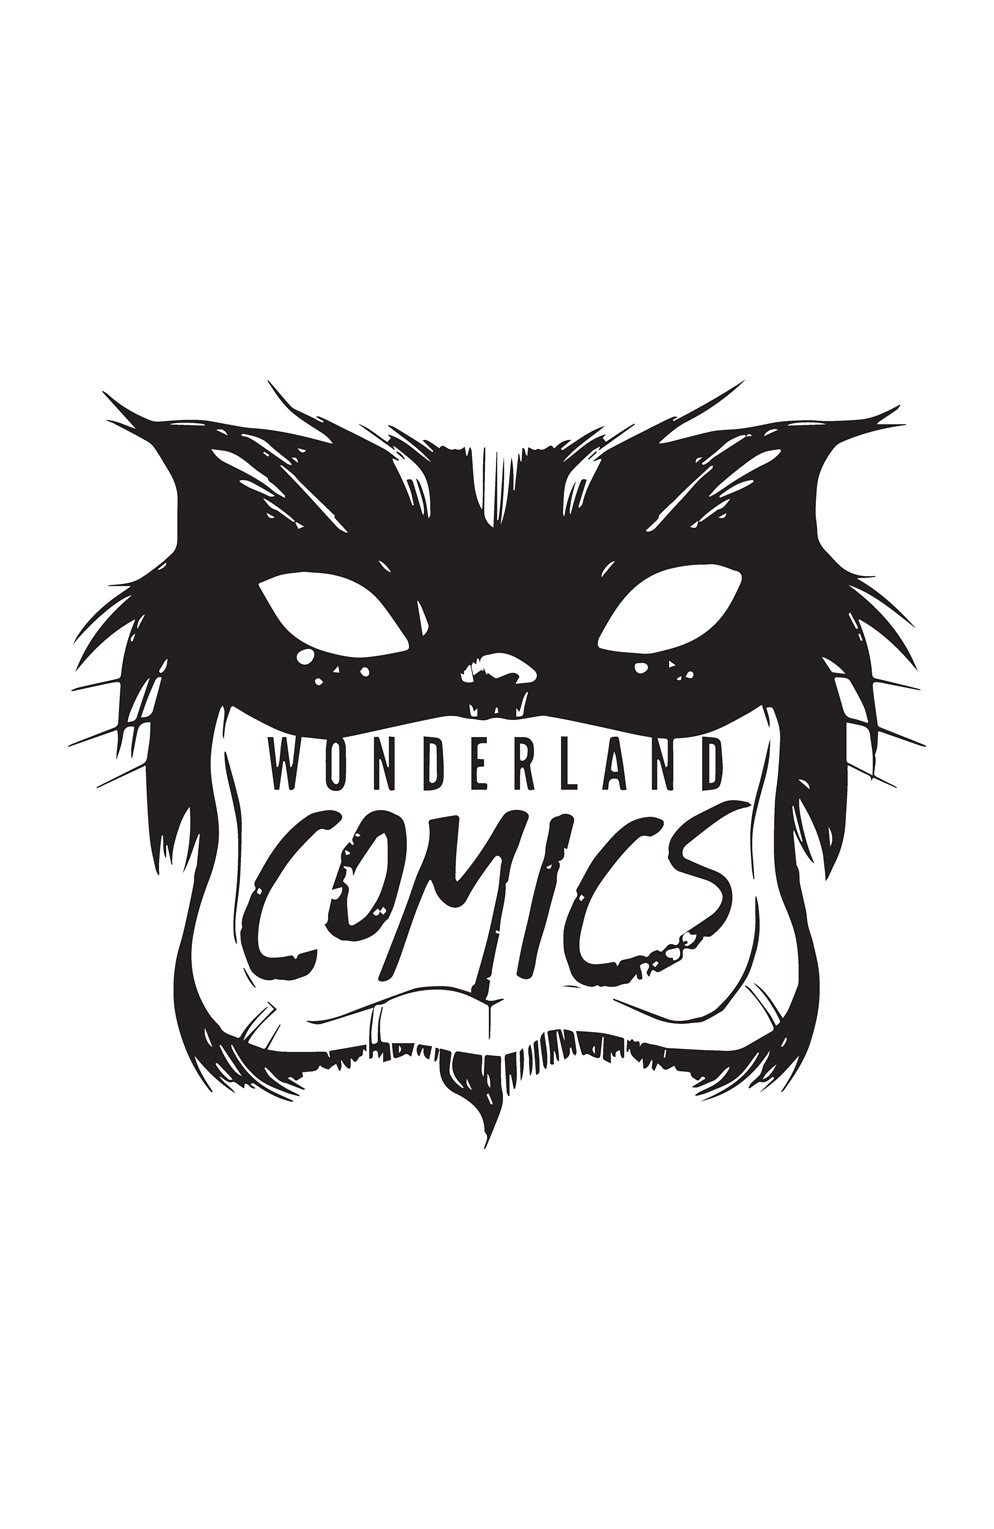 Wonderland Comics - $50 Gift Certificate